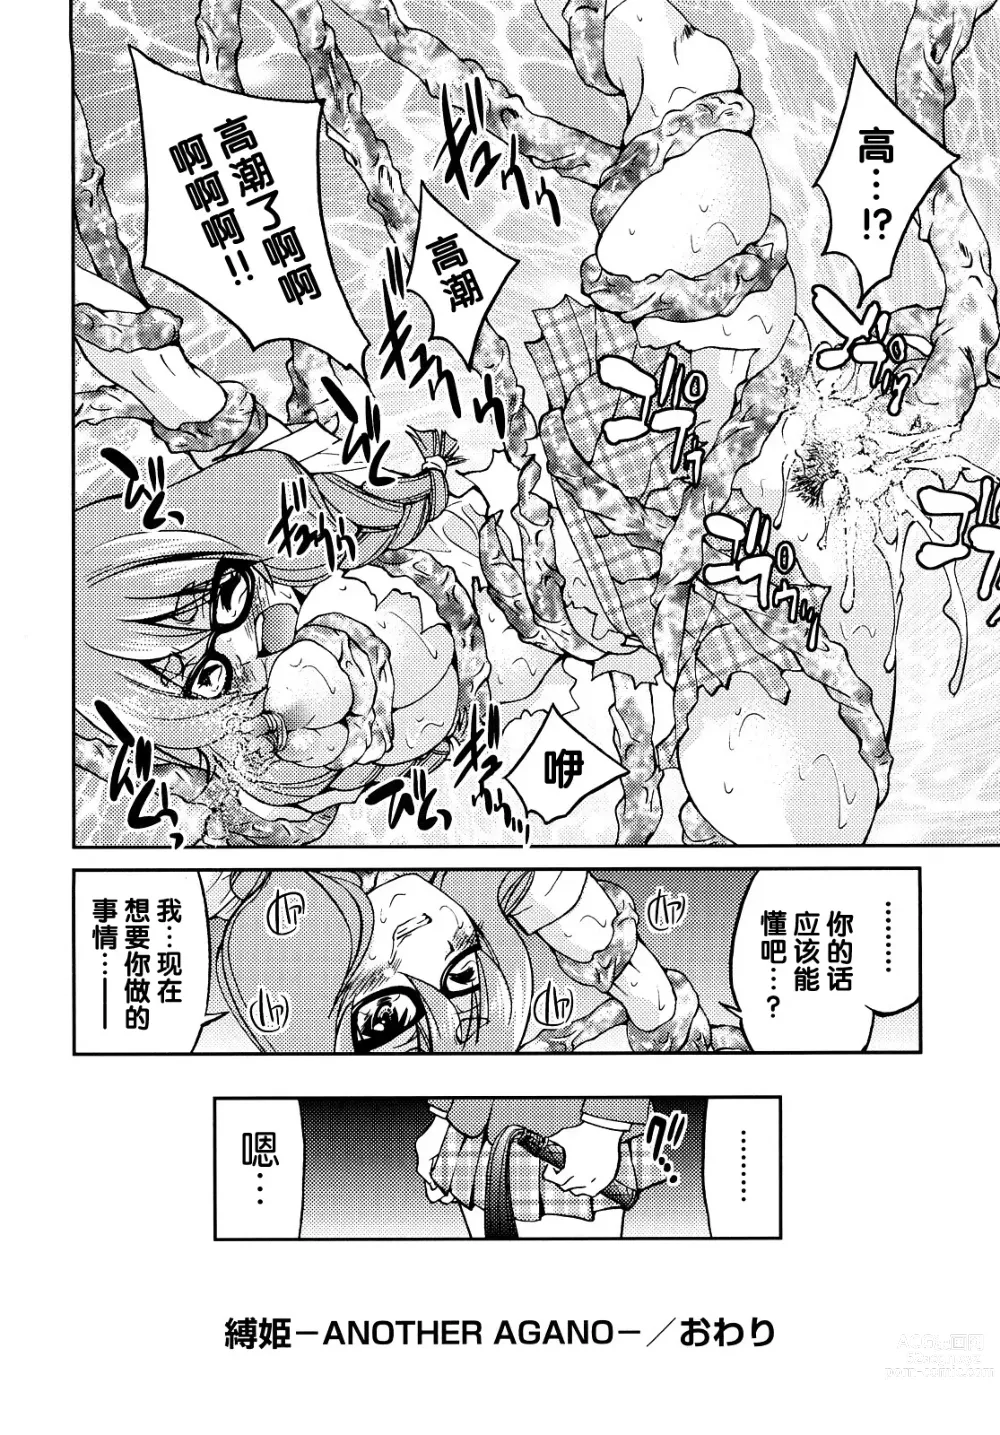 Page 215 of manga Shibarare Hime